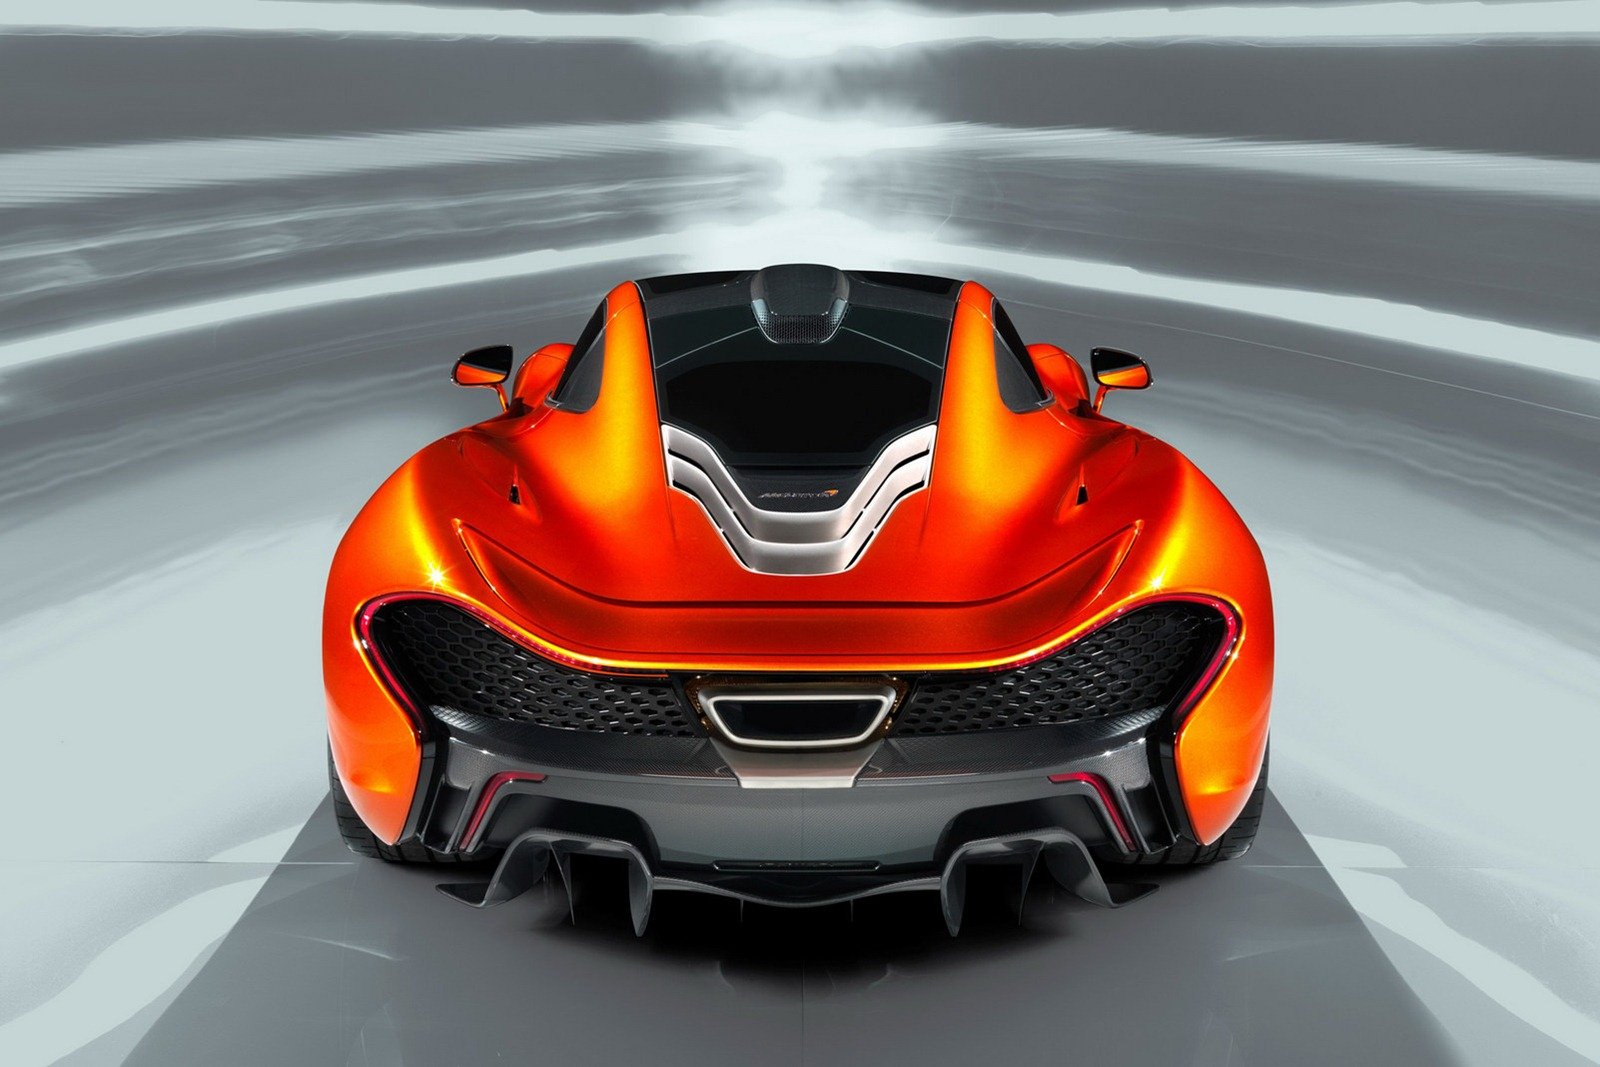 2014 McLaren P1 GTR Concept